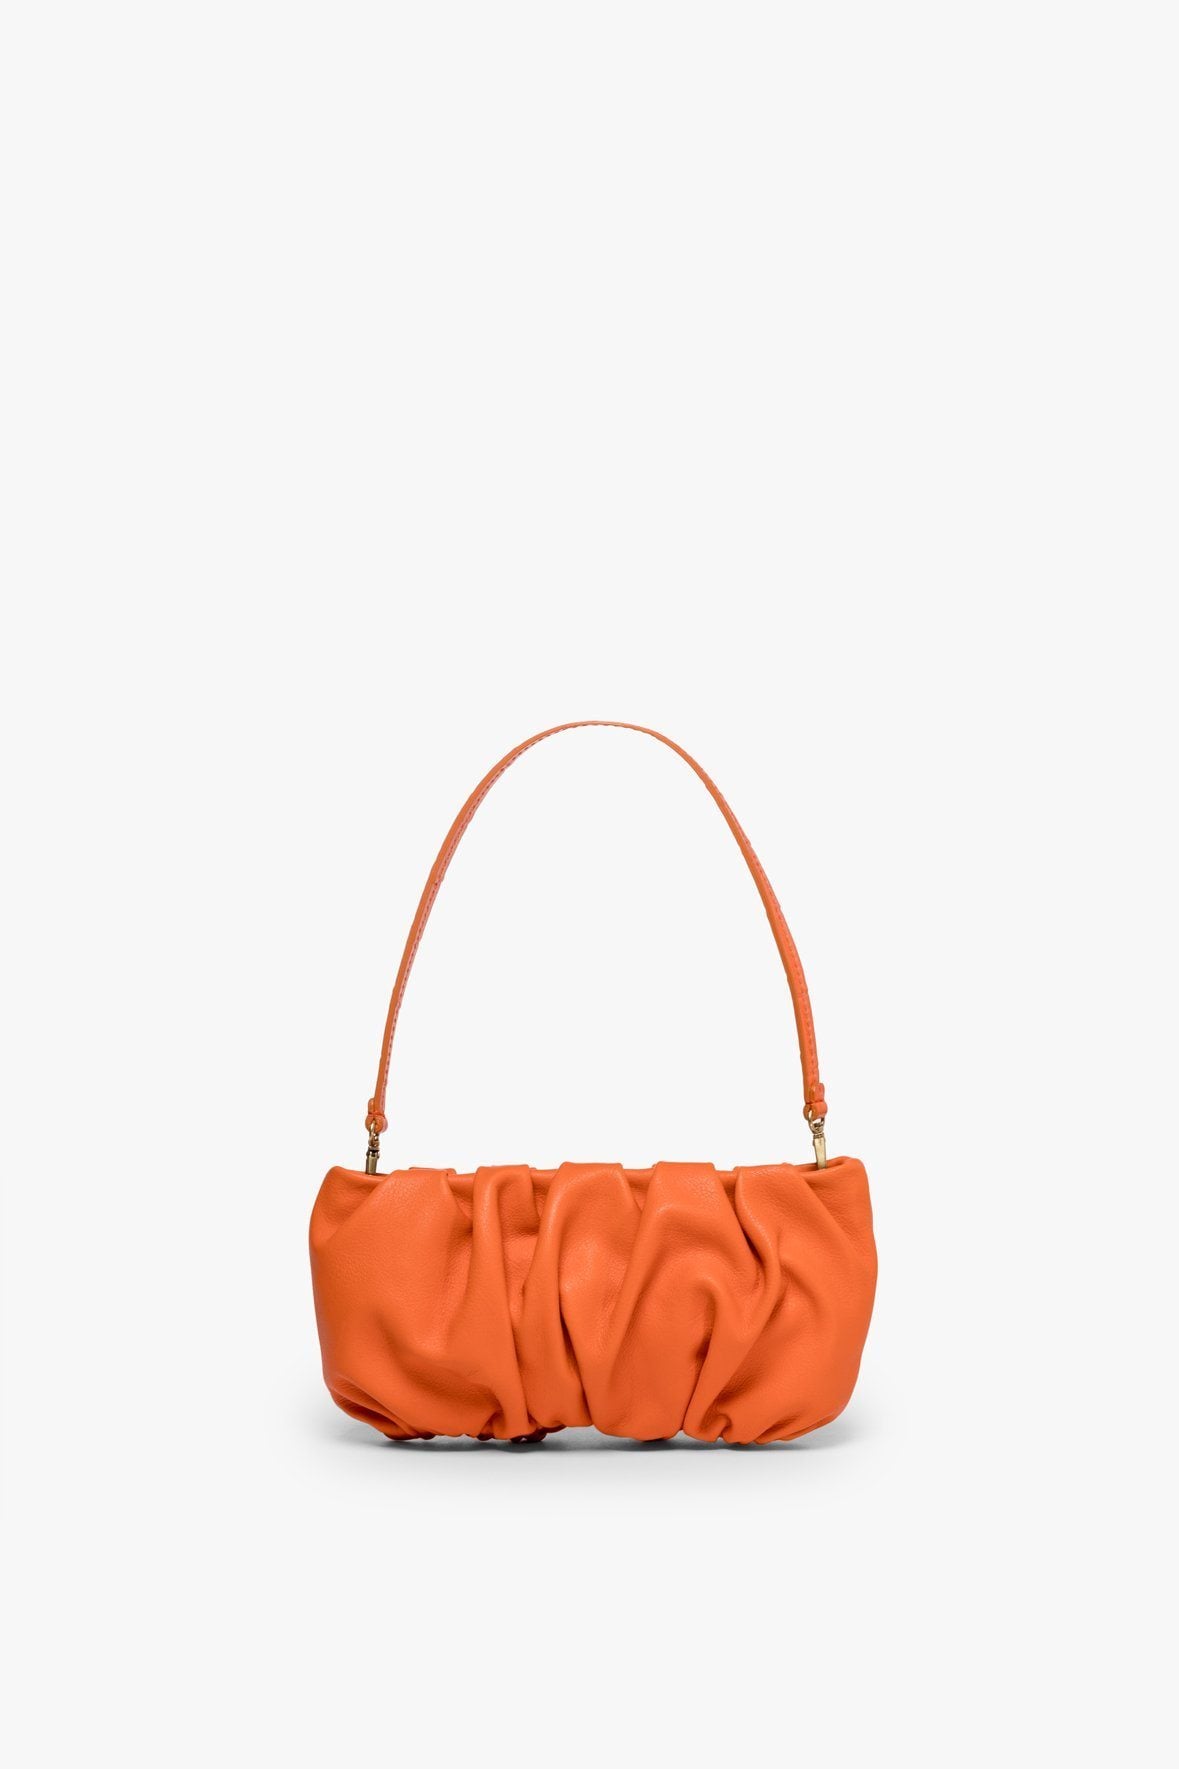 The Best Handbags For Spring 2021